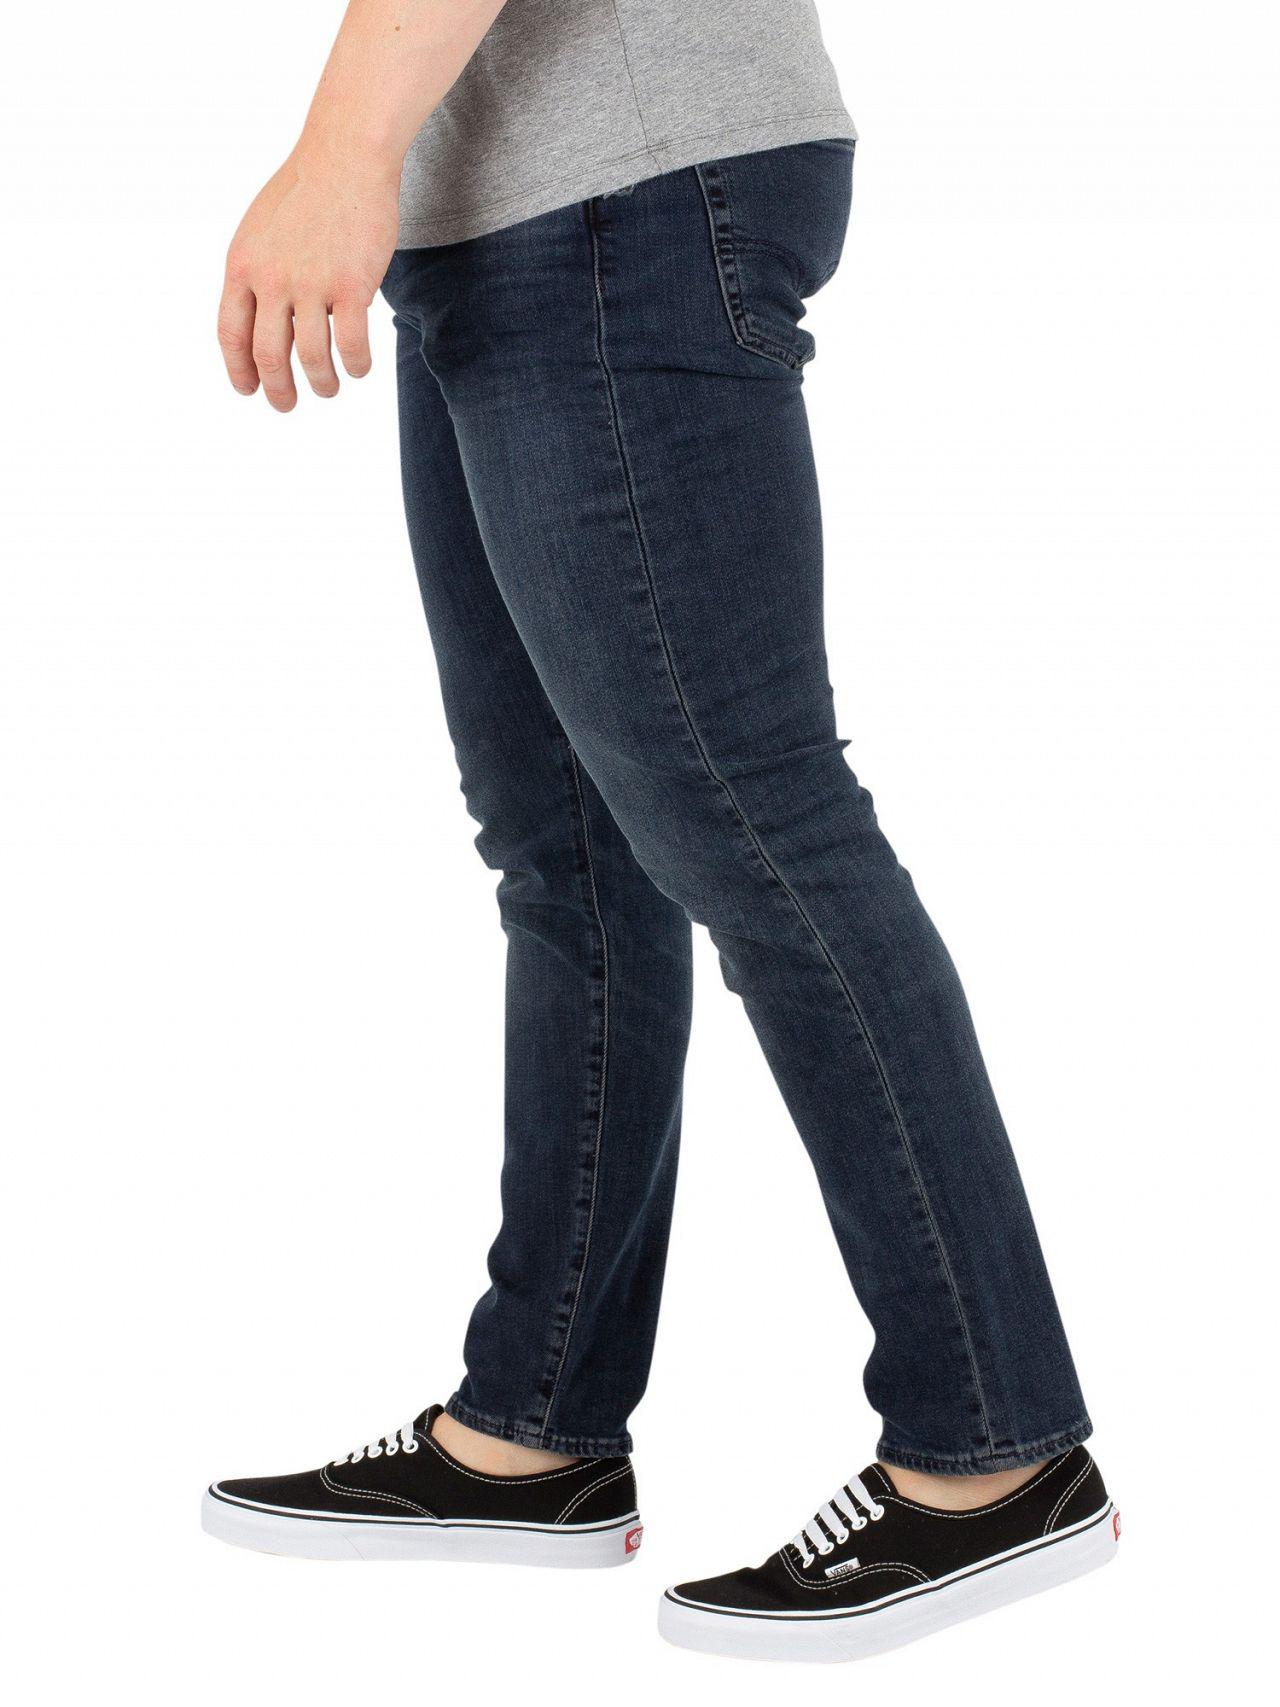 Levi's Denim Headed South 512 Slim Taper Jeans in Blue for Men - Lyst